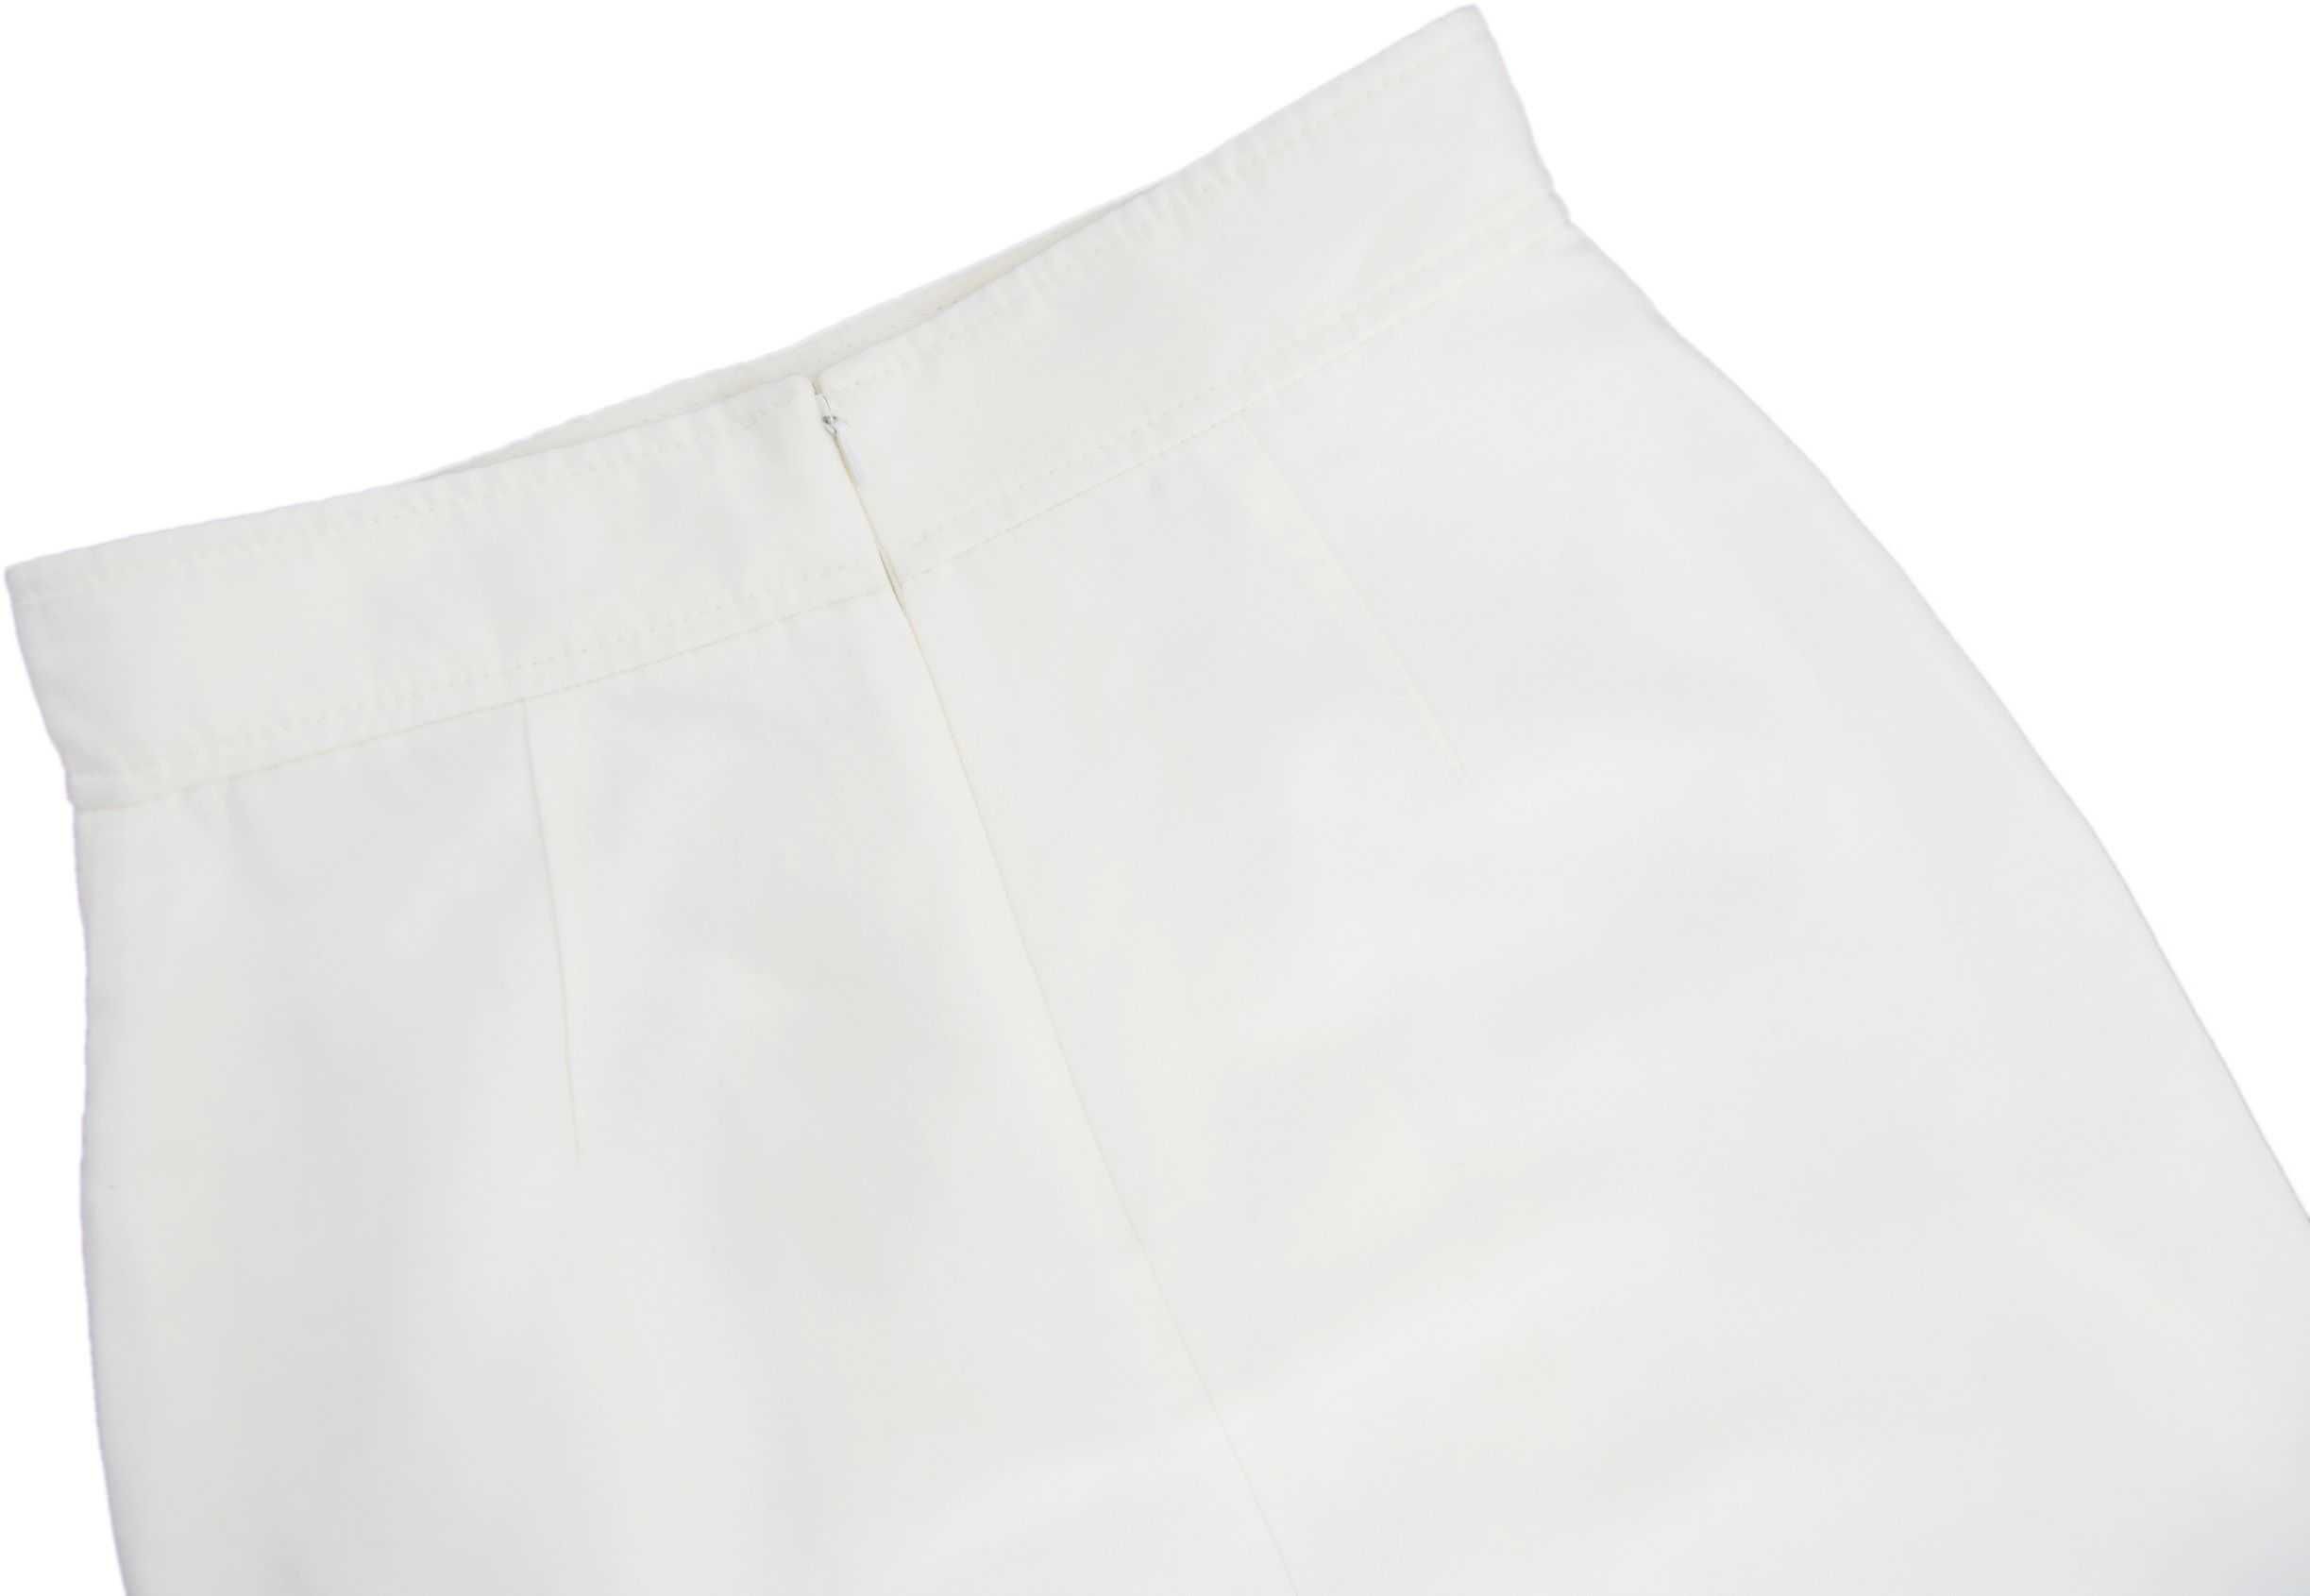 MAX&Co spódnica damska biała midi z zakładkami 36